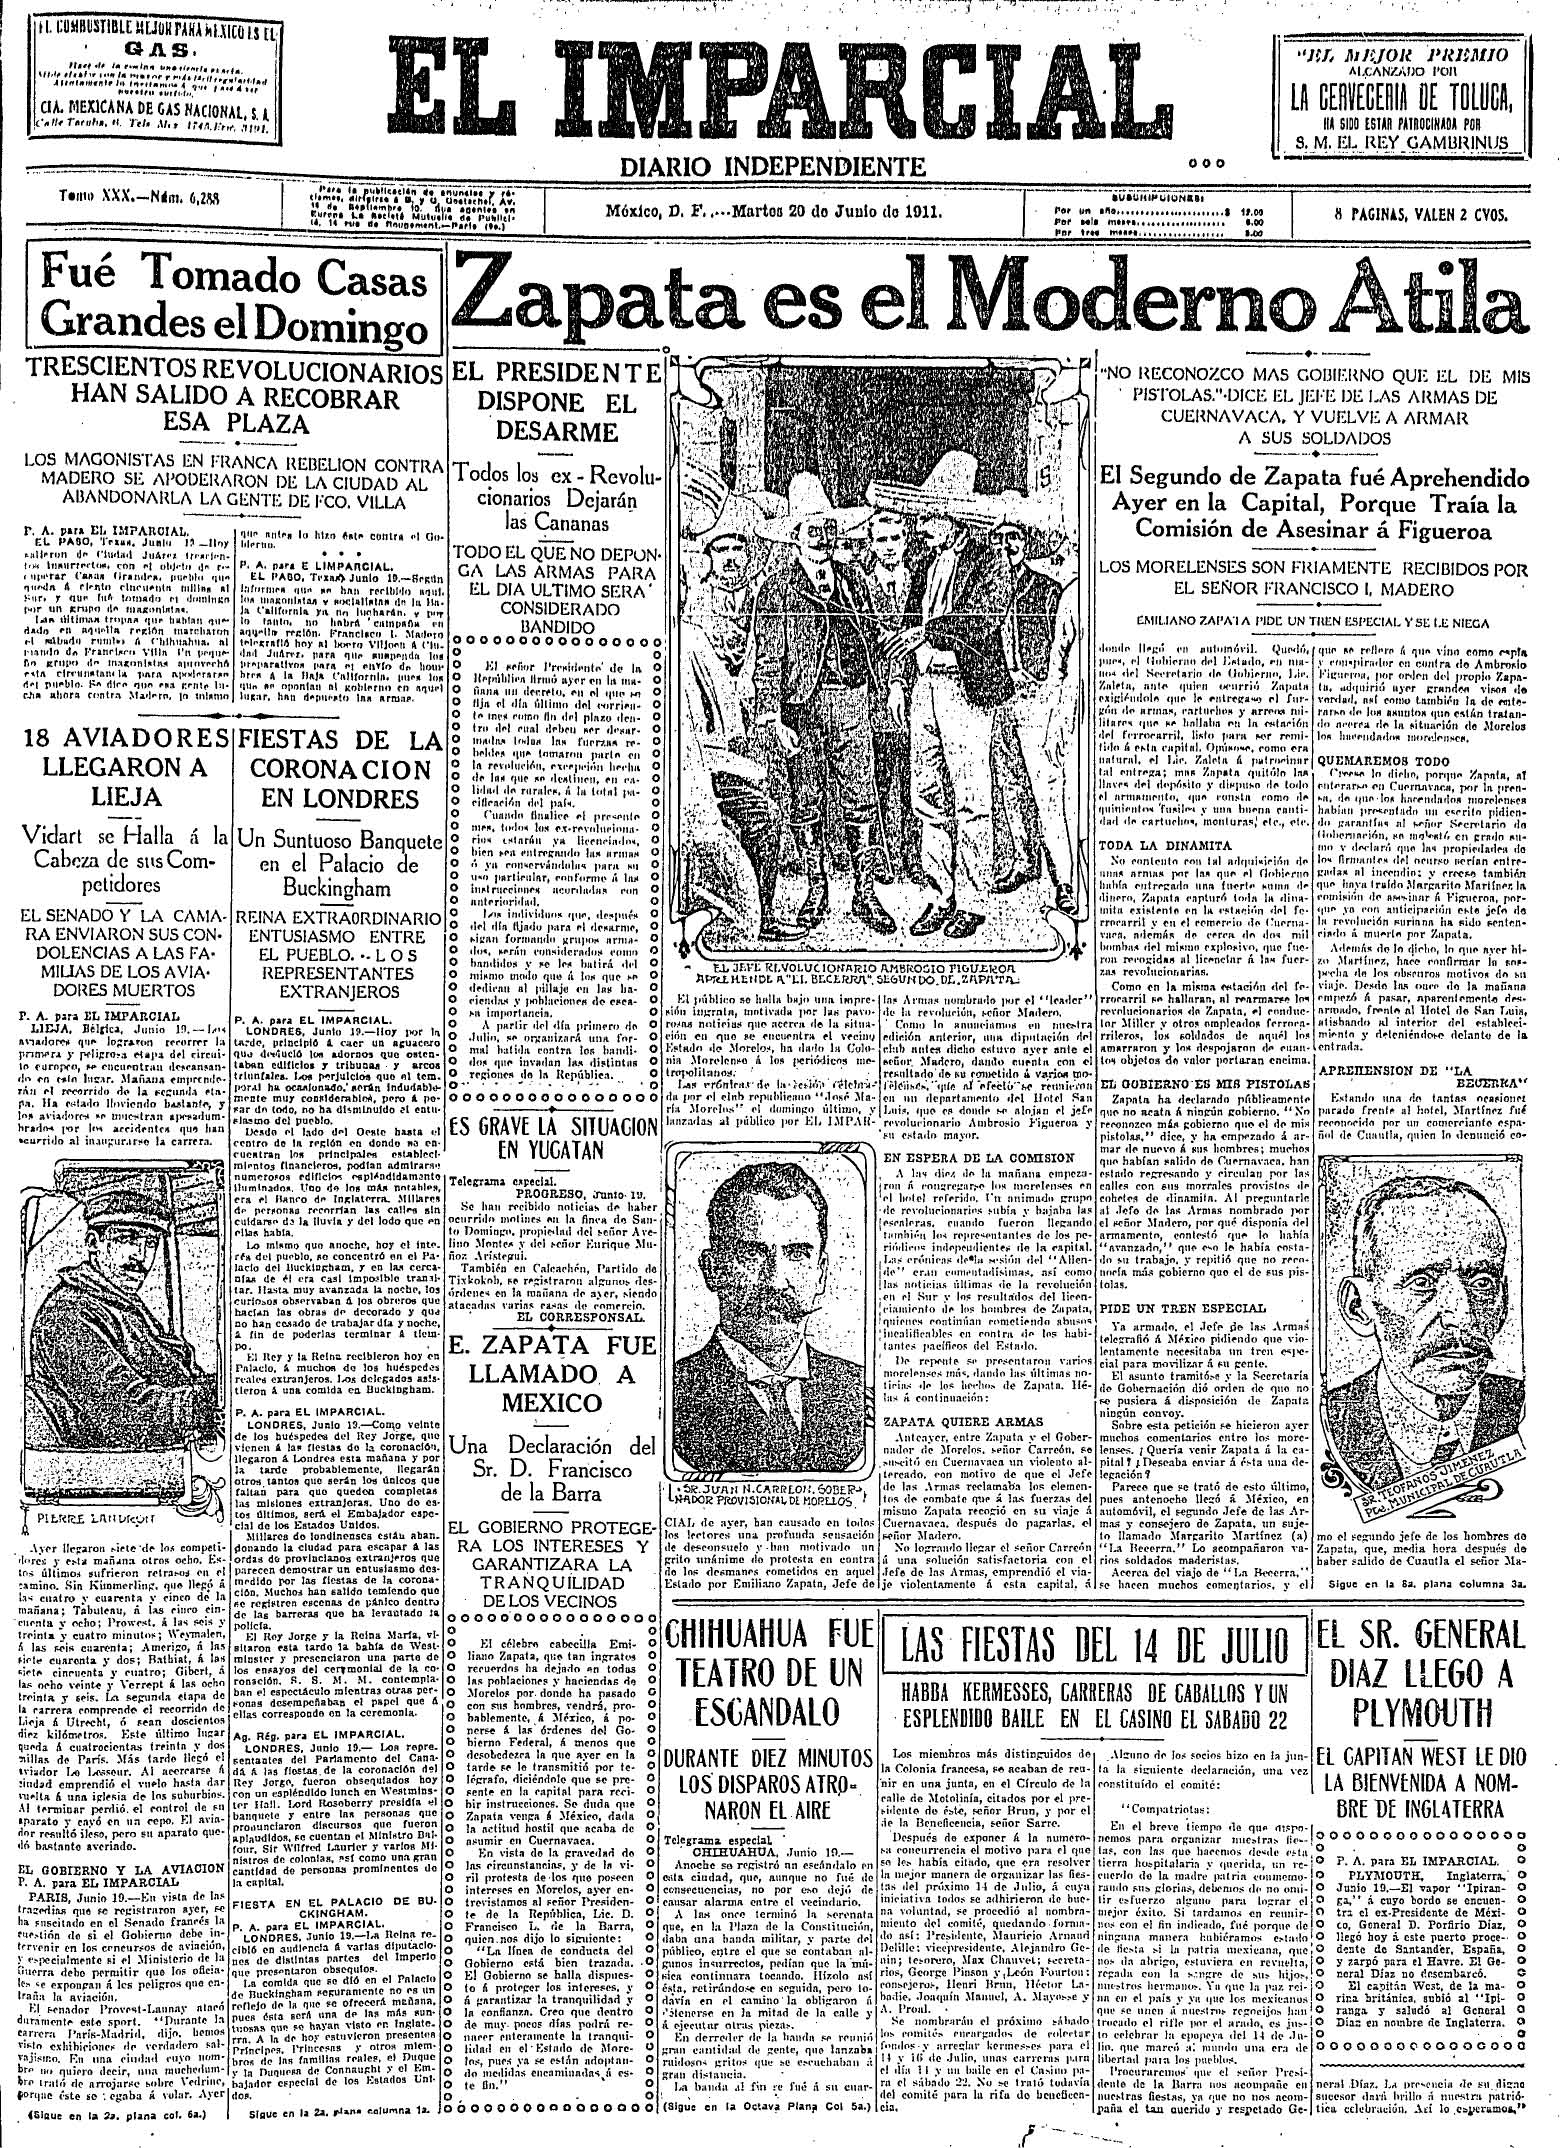 El Imparcial - June 20, 1911